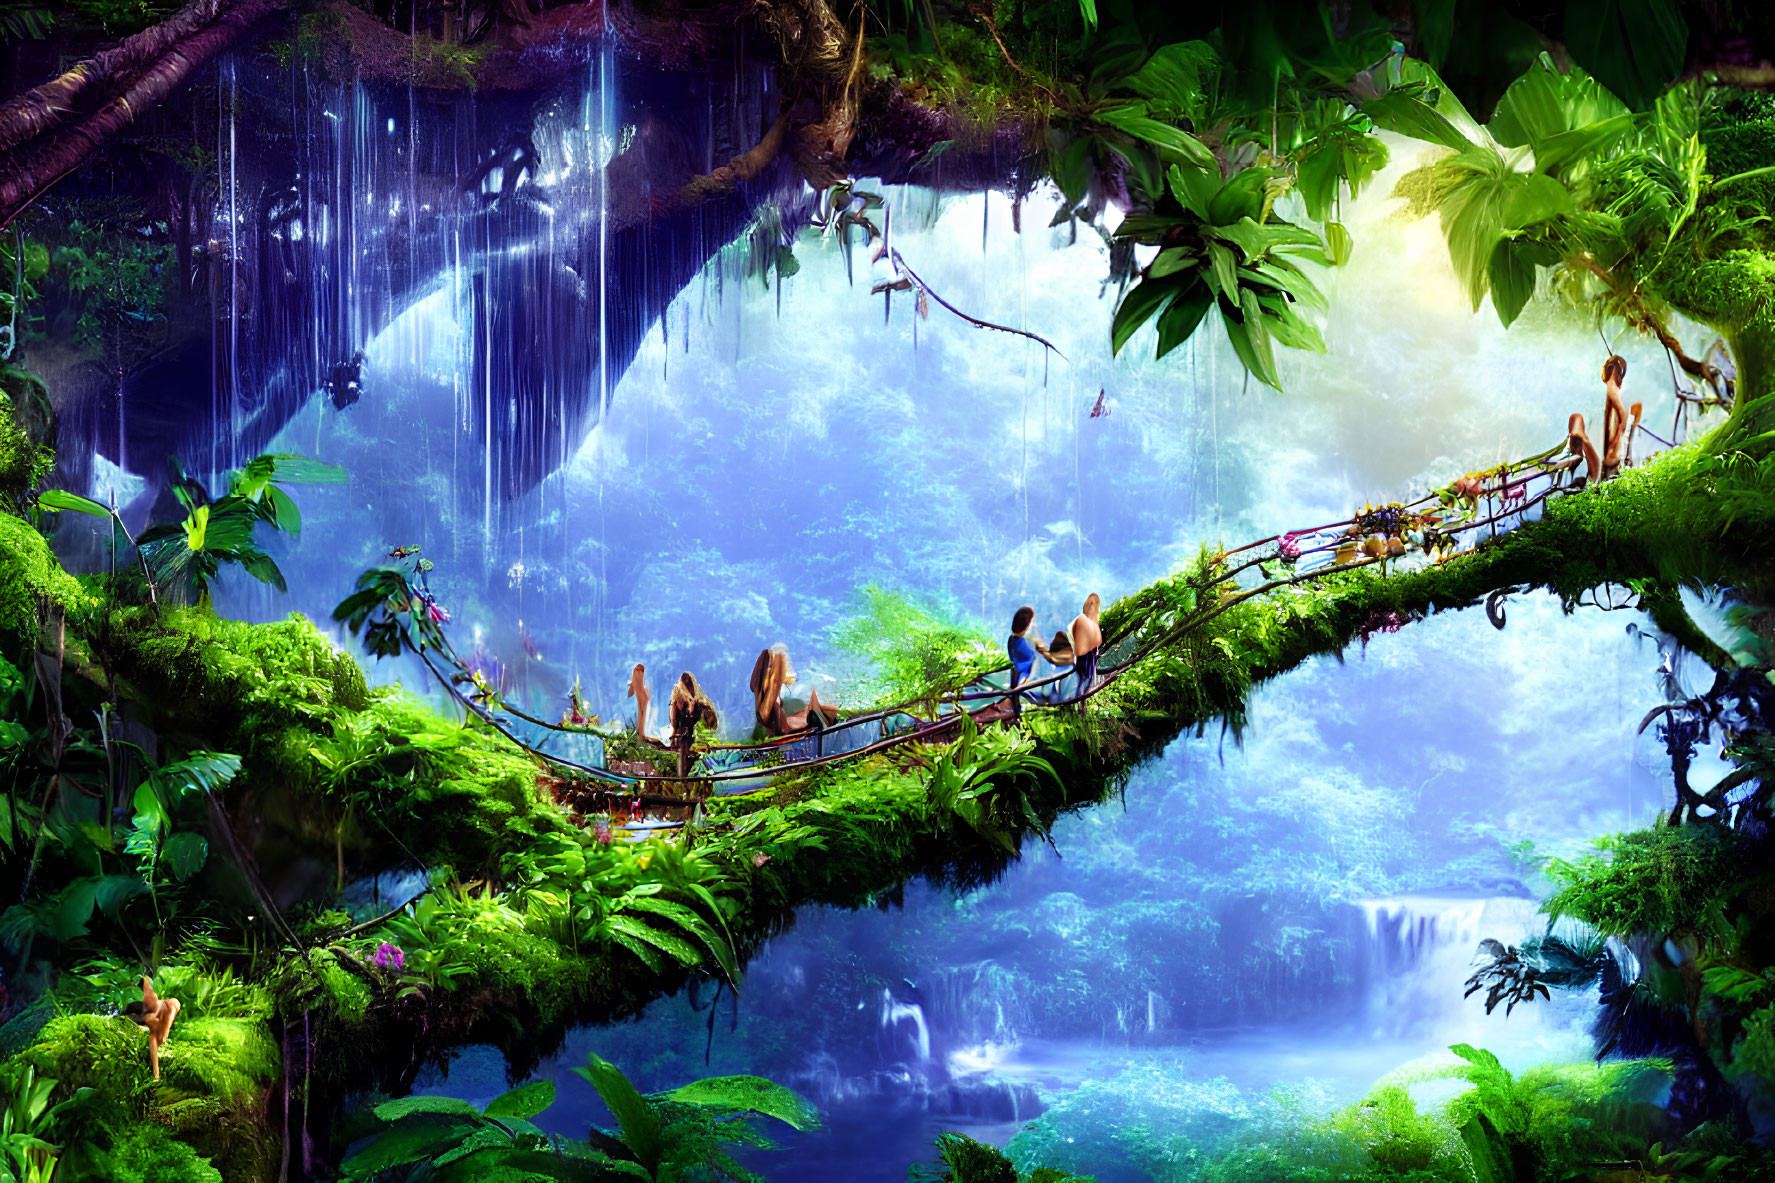 Tropical jungle scene with waterfall, bridge, and lush greenery